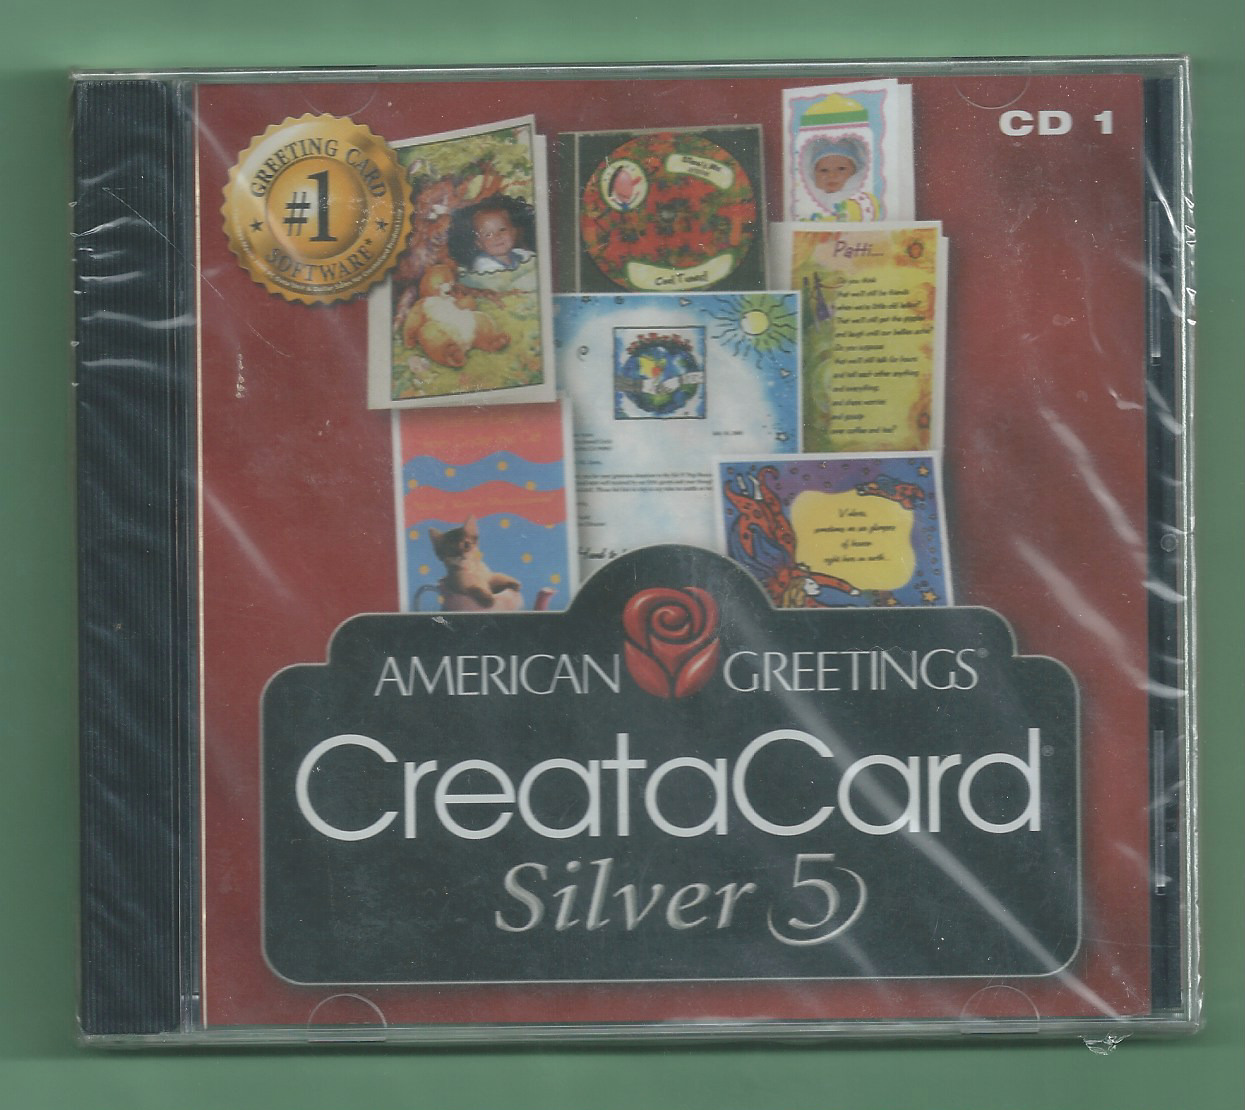 American Greetings Creatacard Silver 5 CD #1 PC Program Brand NEW Sealed